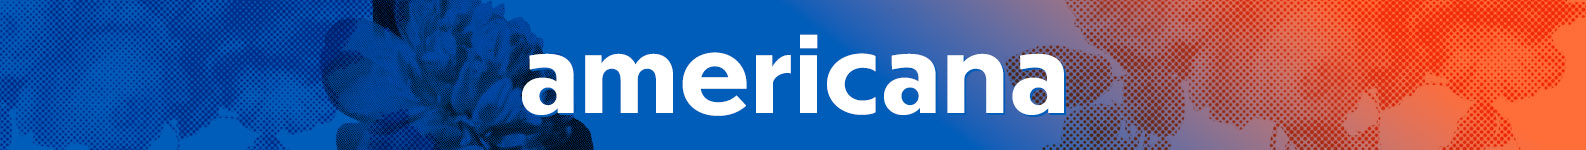 Journeys Americana Collection brand header image